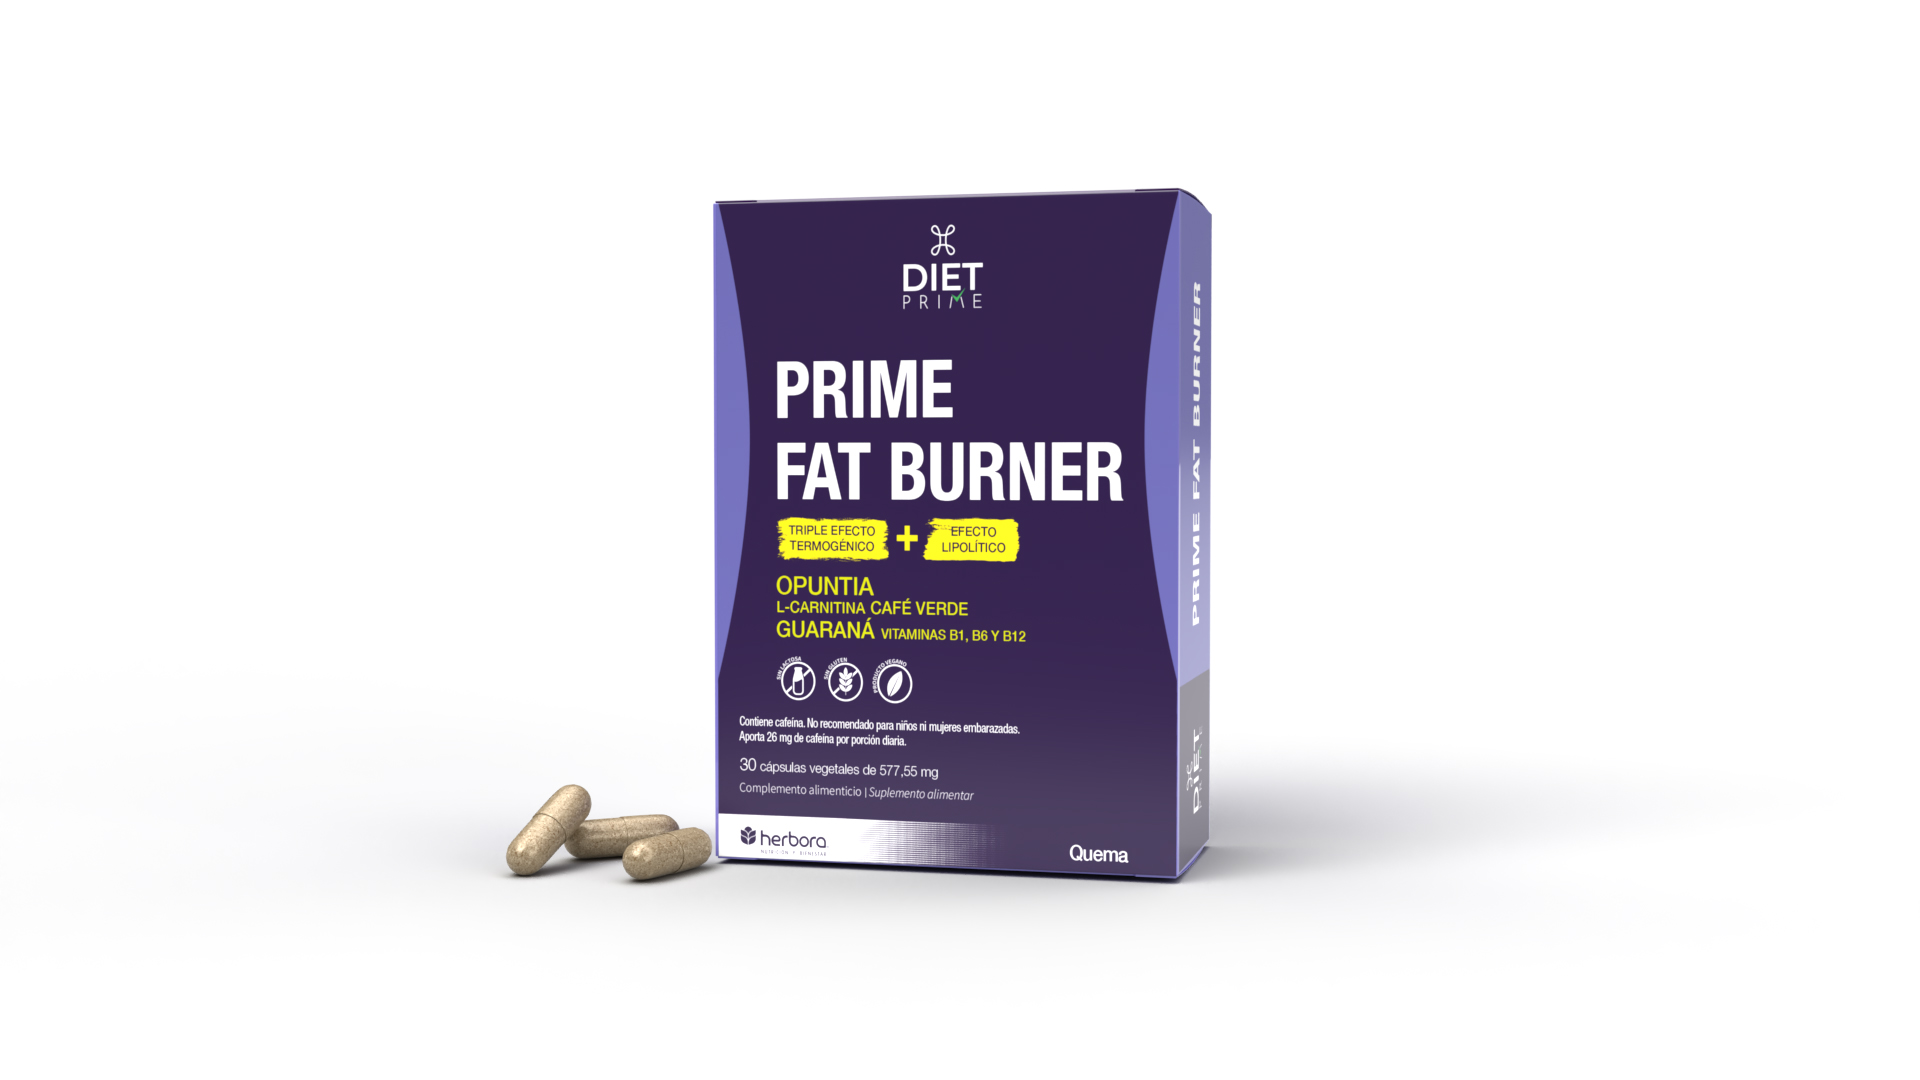 Prime Fat Burner